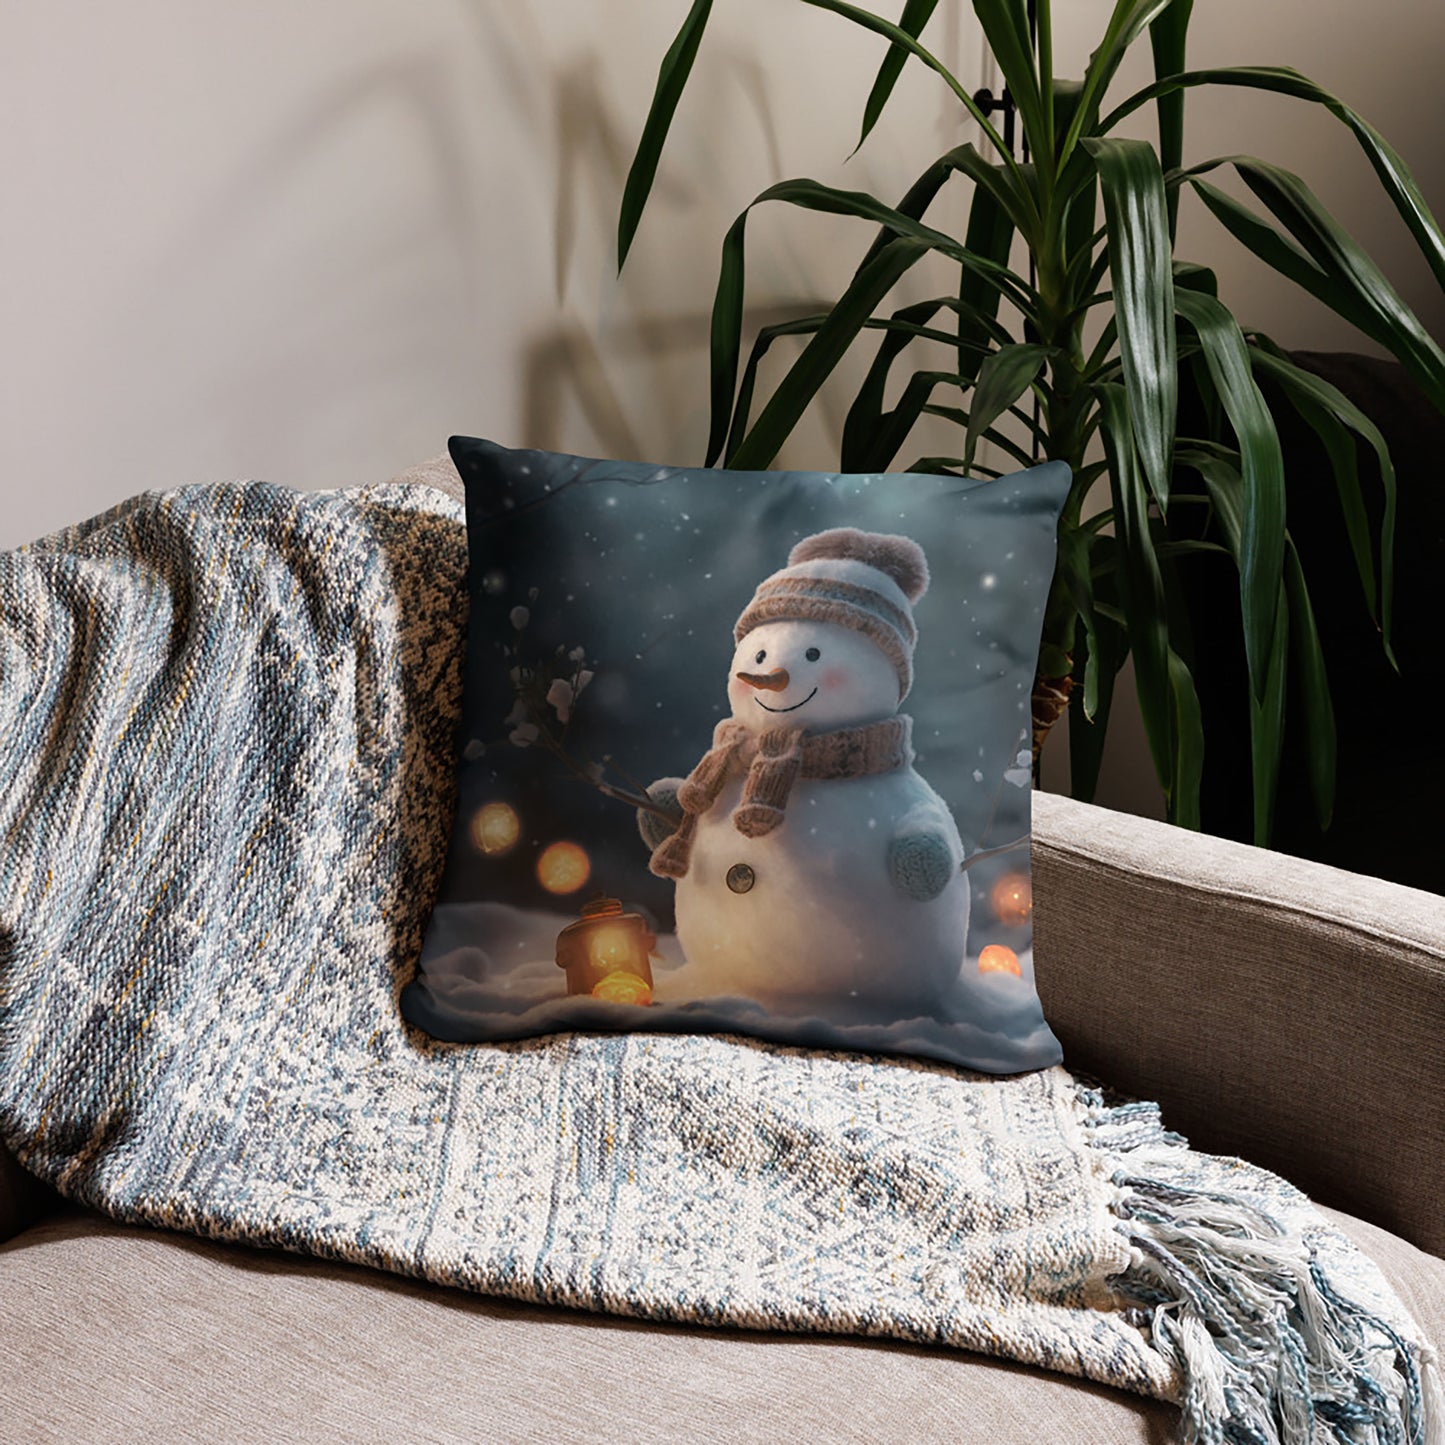 Christmas Throw Pillow Winter Wonderland Snowman Polyester Decorative Cushion 18x18